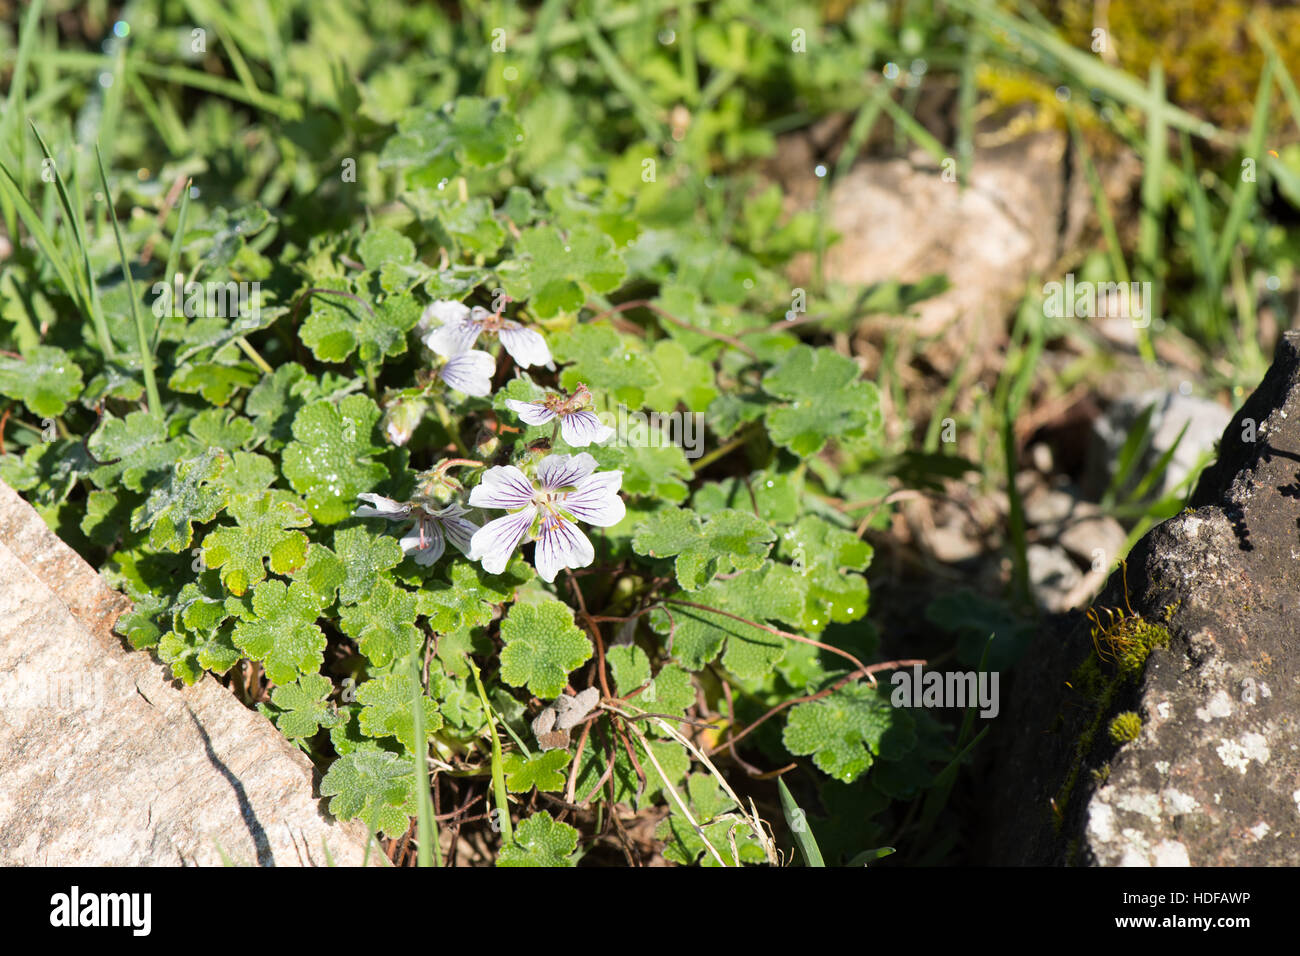 Geranium renardii plant with flowers Stock Photo